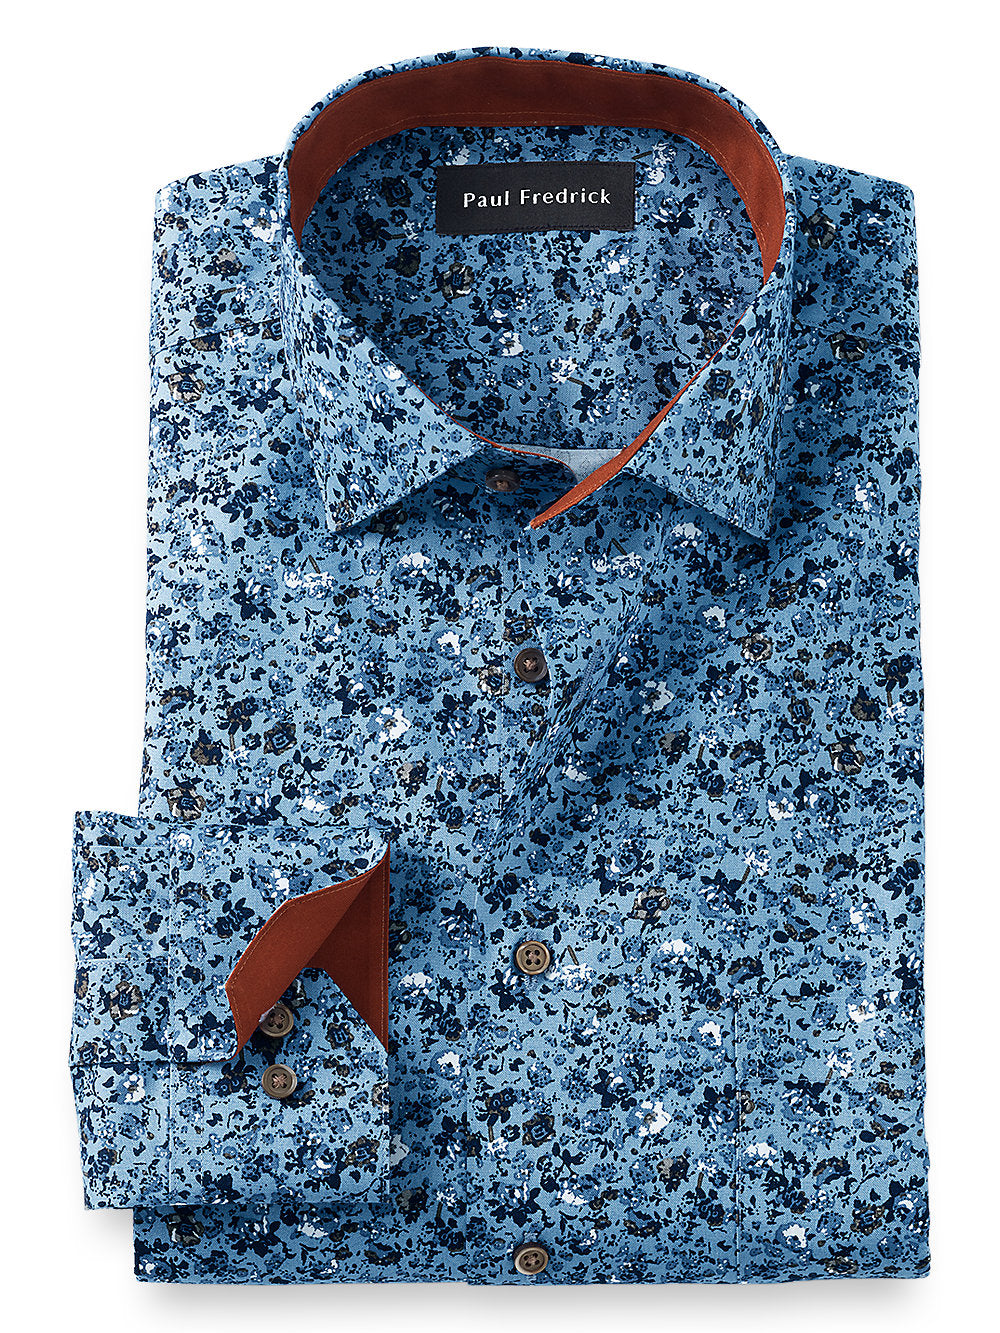 Paul Fredrick Blue Floral Long Sleeve Button Down Shirt